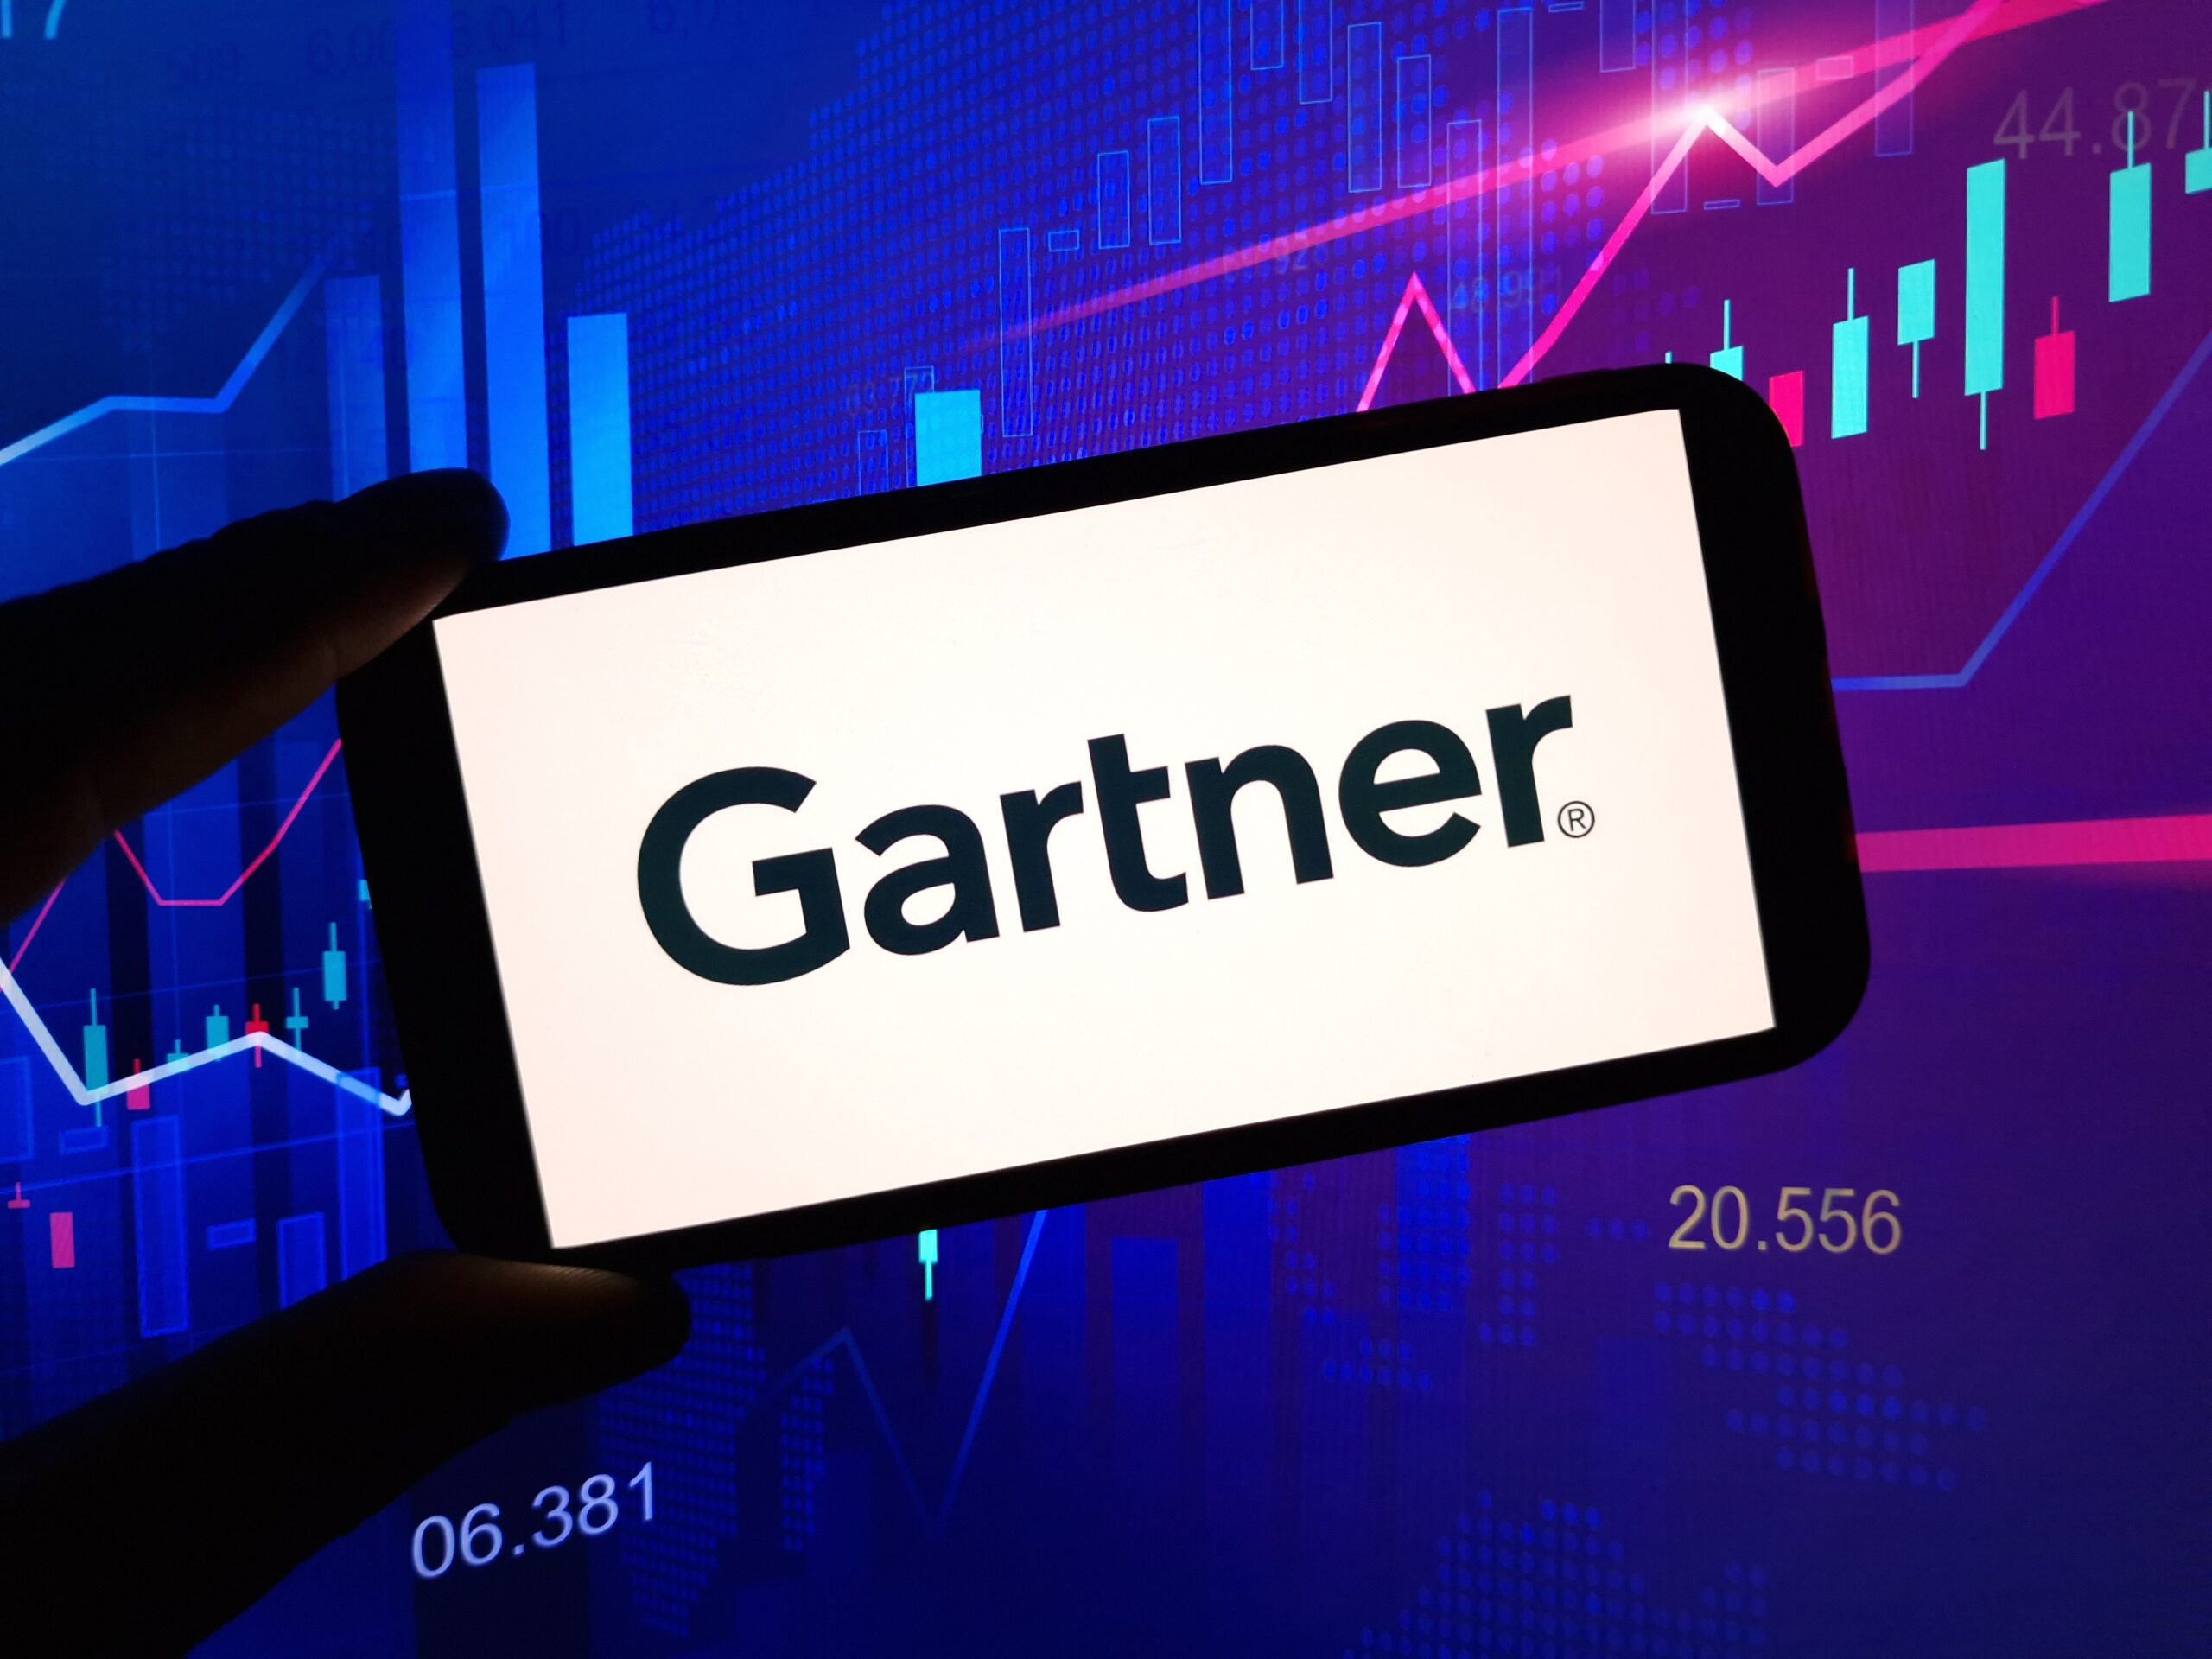 Gartner company logo displayed on mobile phone screen